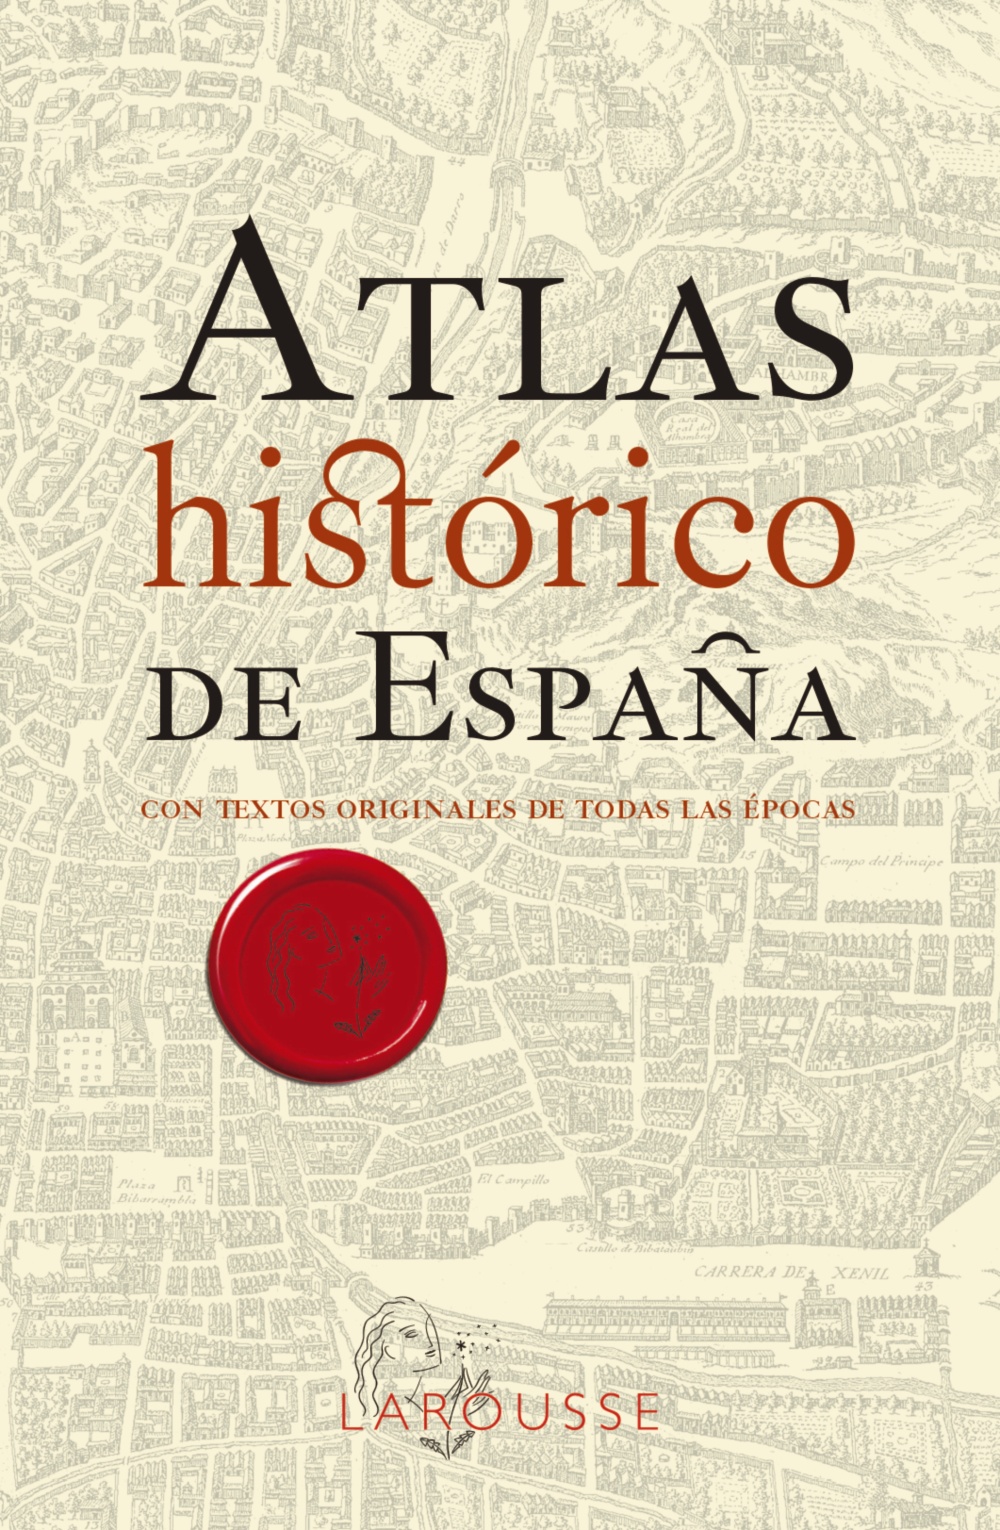 La historia de España en 85 mapas